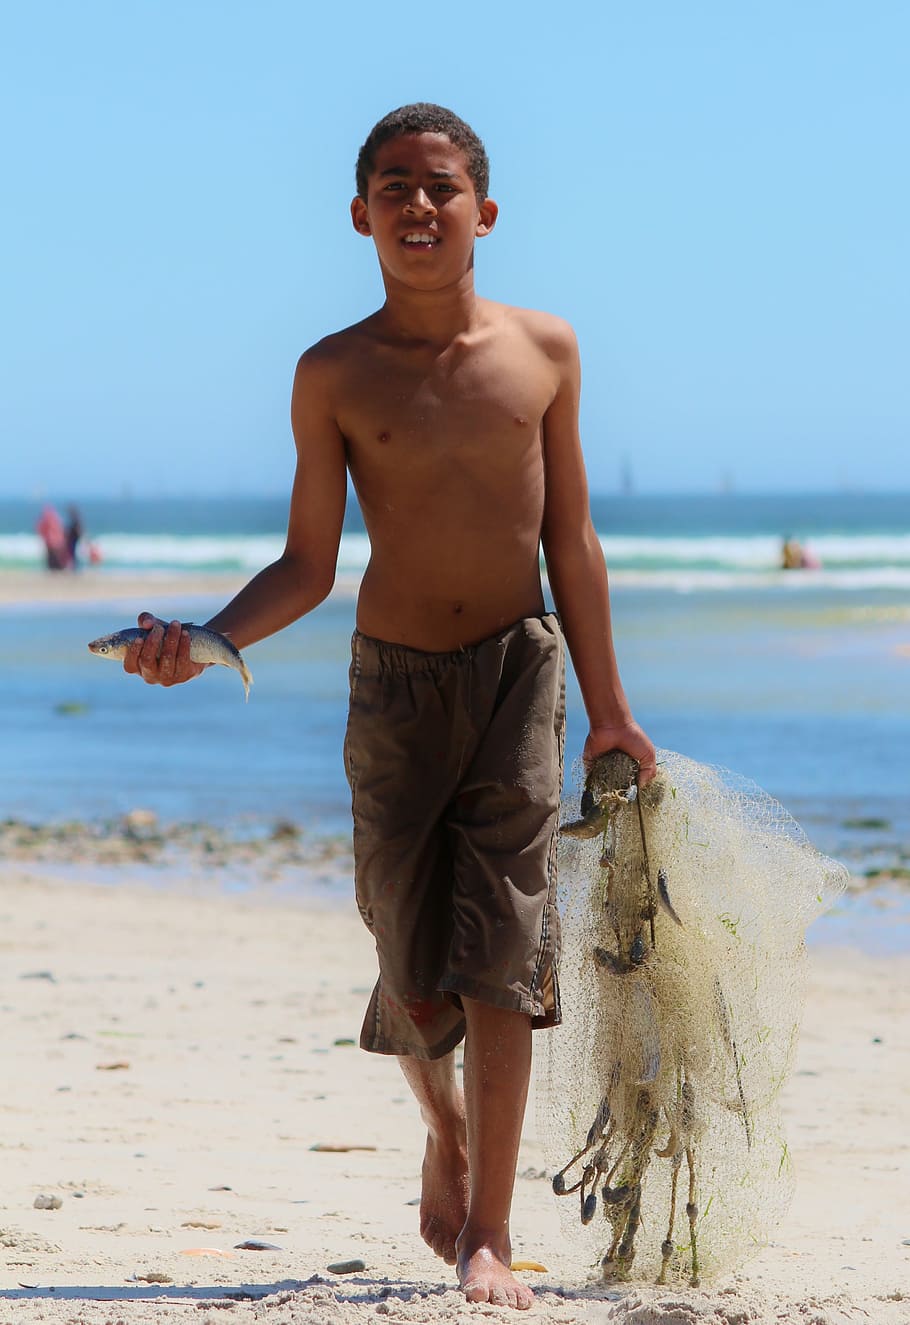 HD wallpaper: boy holding fish and net near seashore, beach, ocean